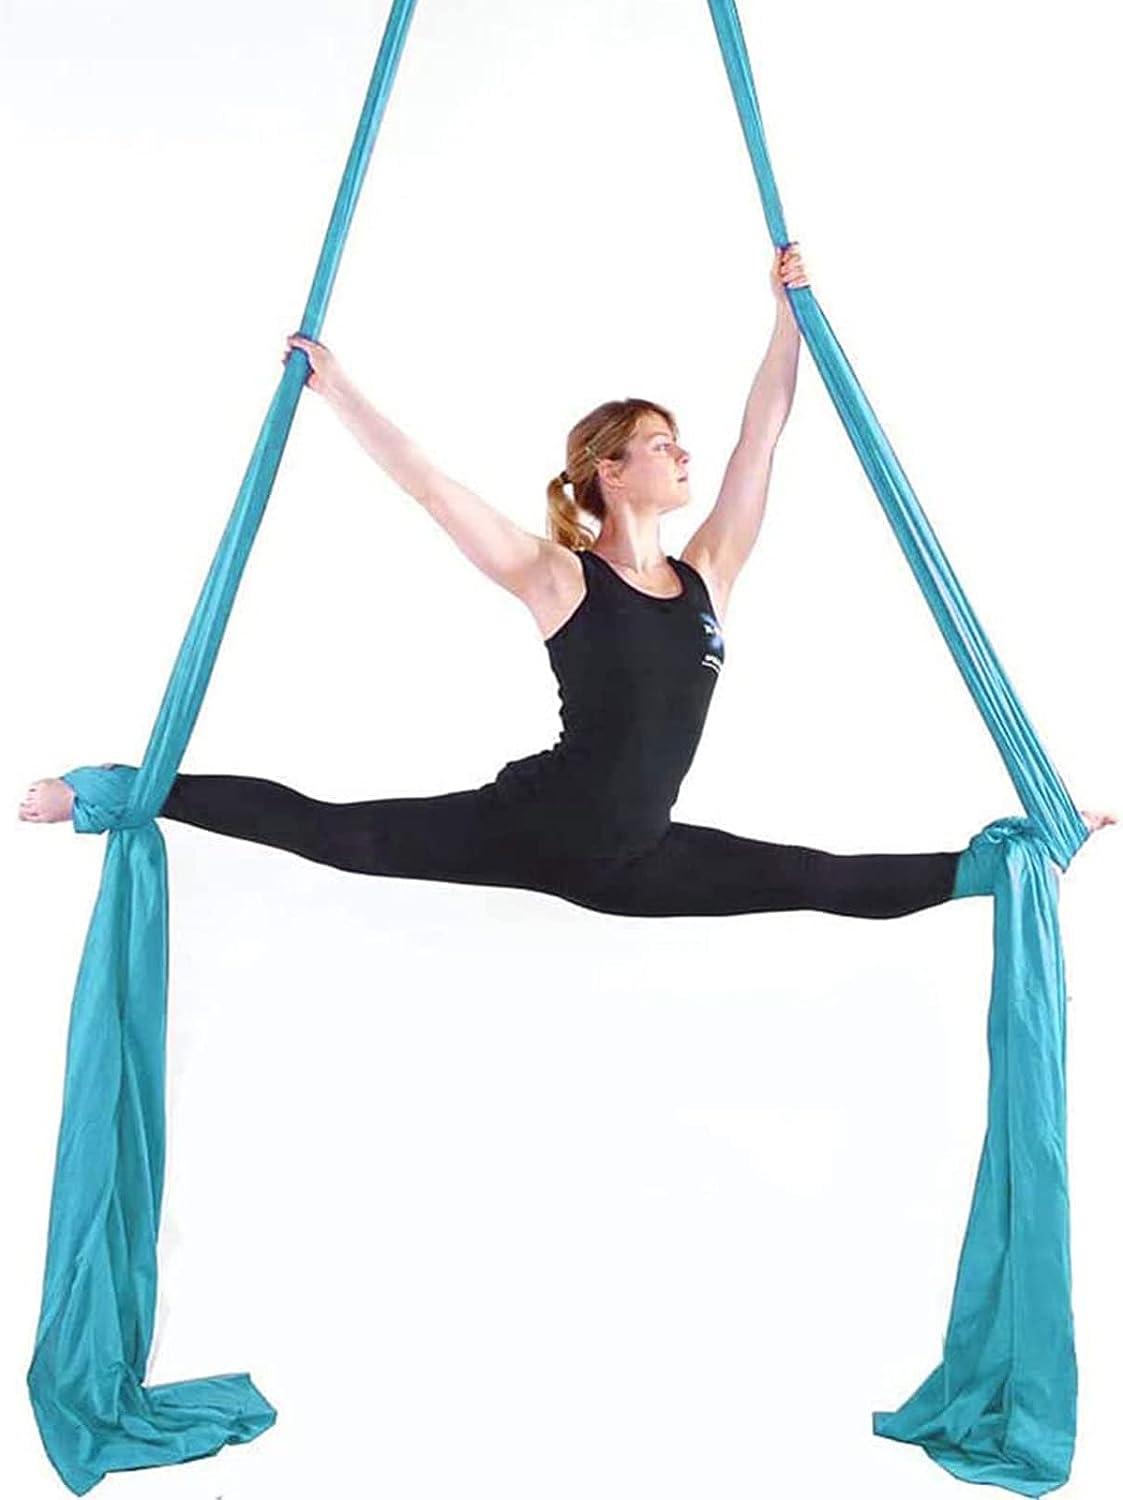 Aerial Silks Yoga Swing Set Equipment - 9 Yards Aerial Yoga Hammock kit,  Low-stretch fabrics for Beginner Dance, Full Accessories (Light blue) price  in Saudi Arabia,  Saudi Arabia